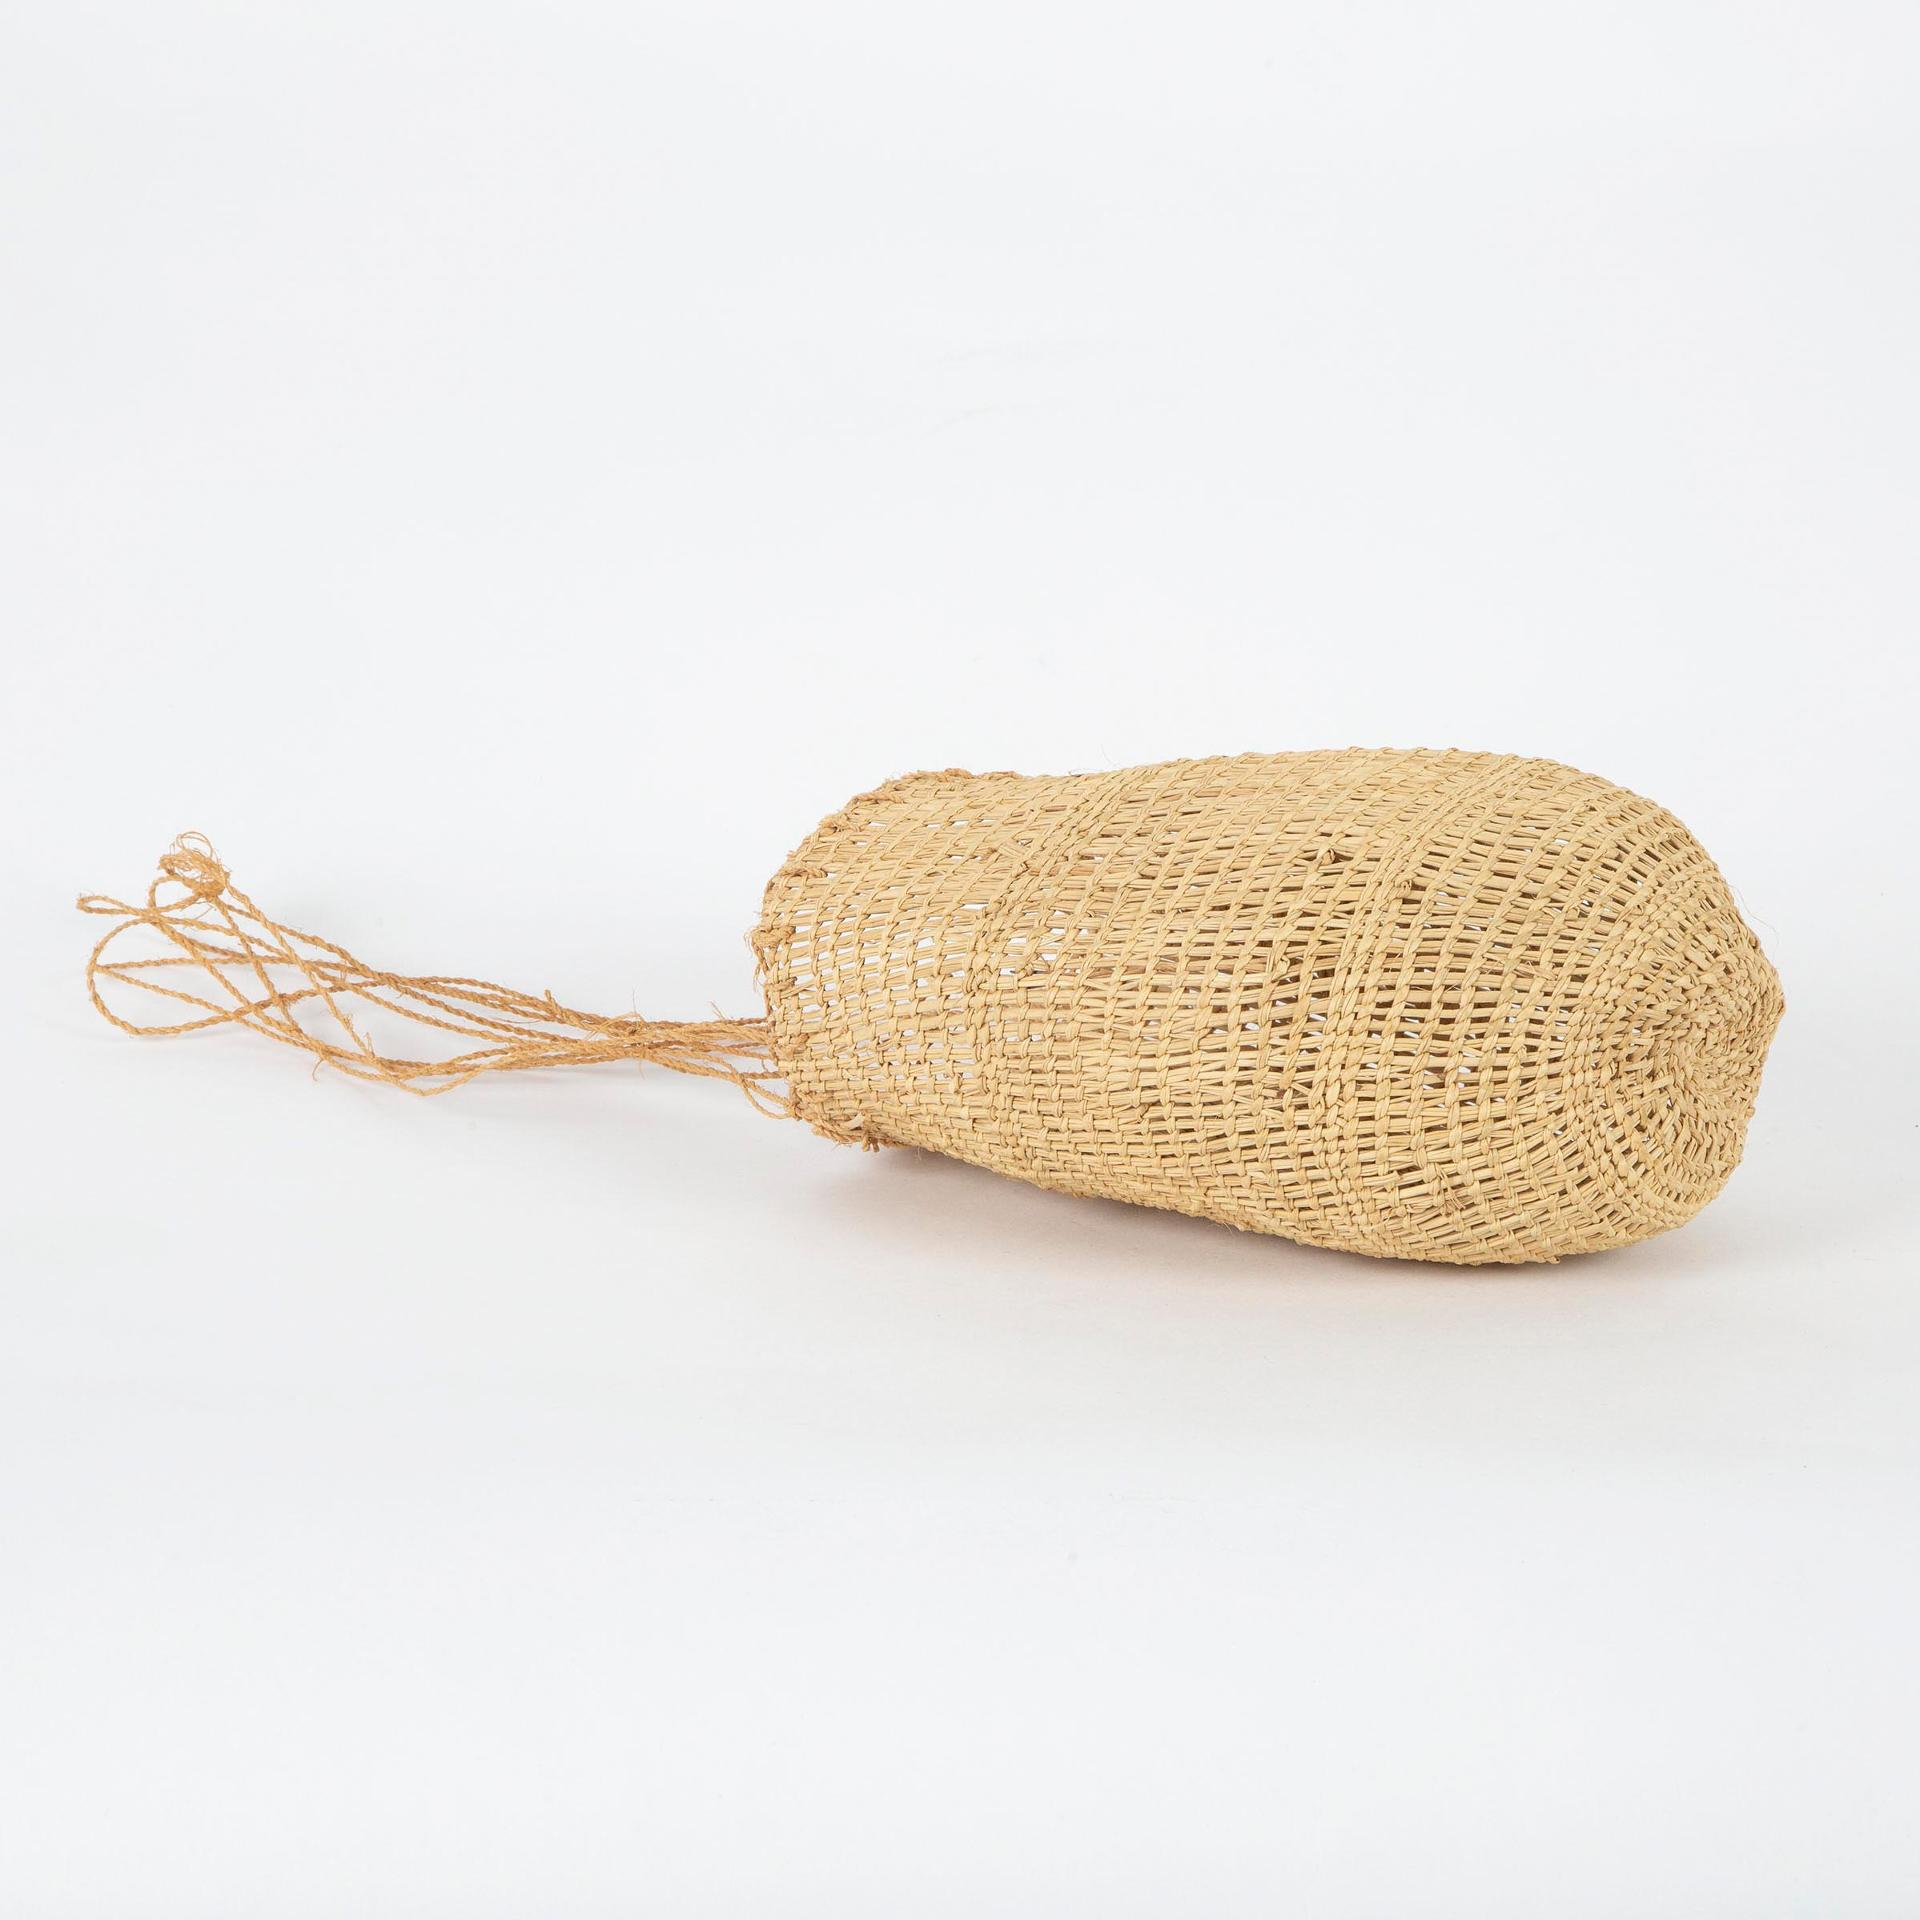 Australian Pandanus Palm Basket - Late 20th Century